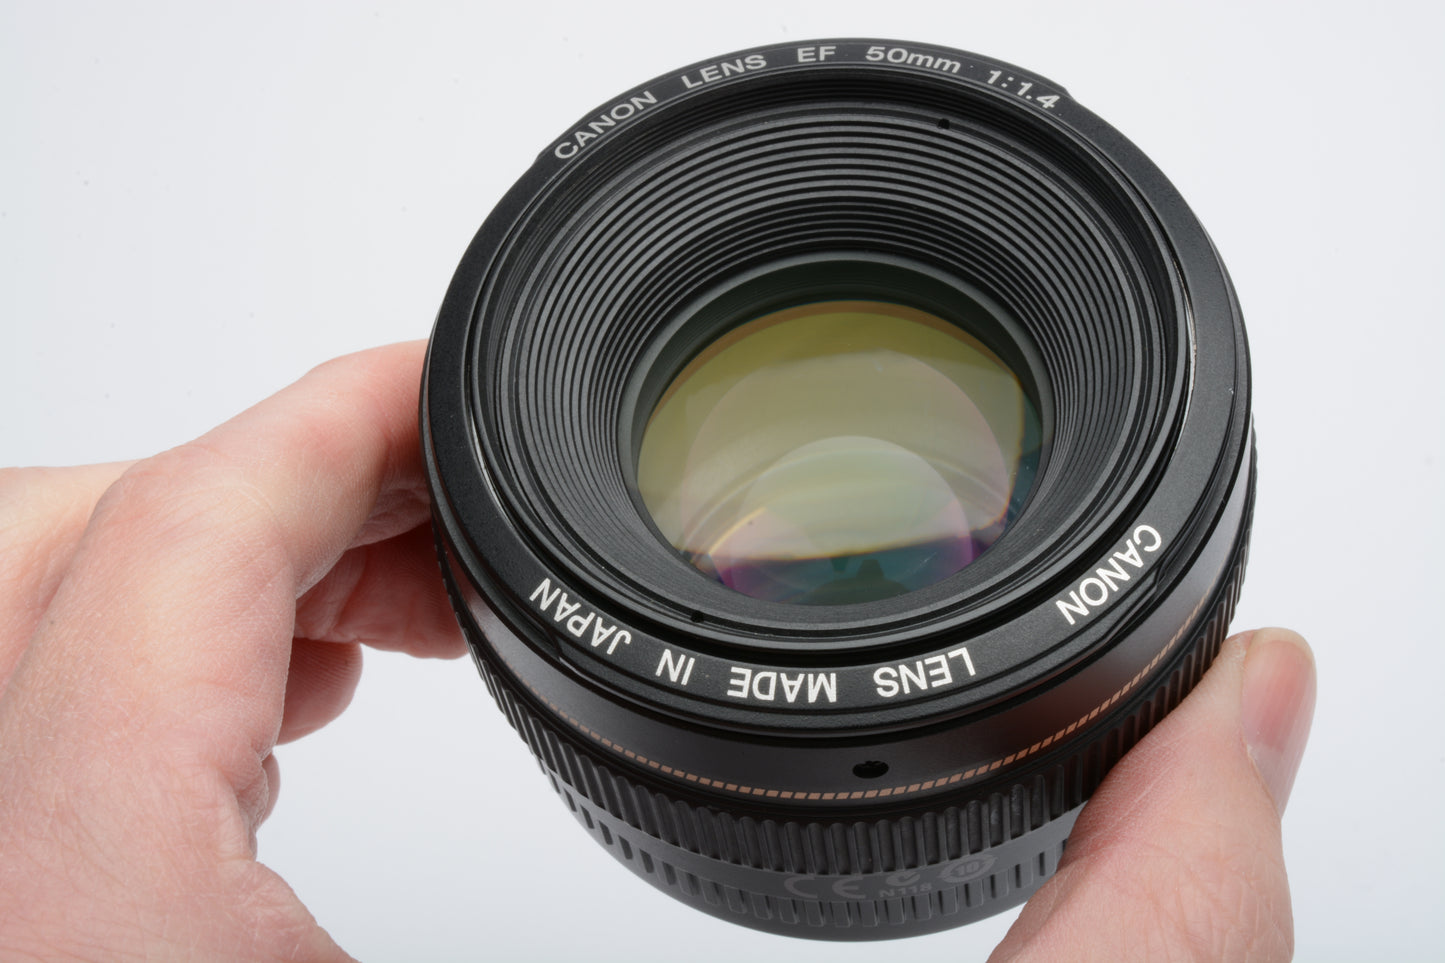 Canon EF 50mm f1.4 USM lens, caps, nice & clean, very sharp!